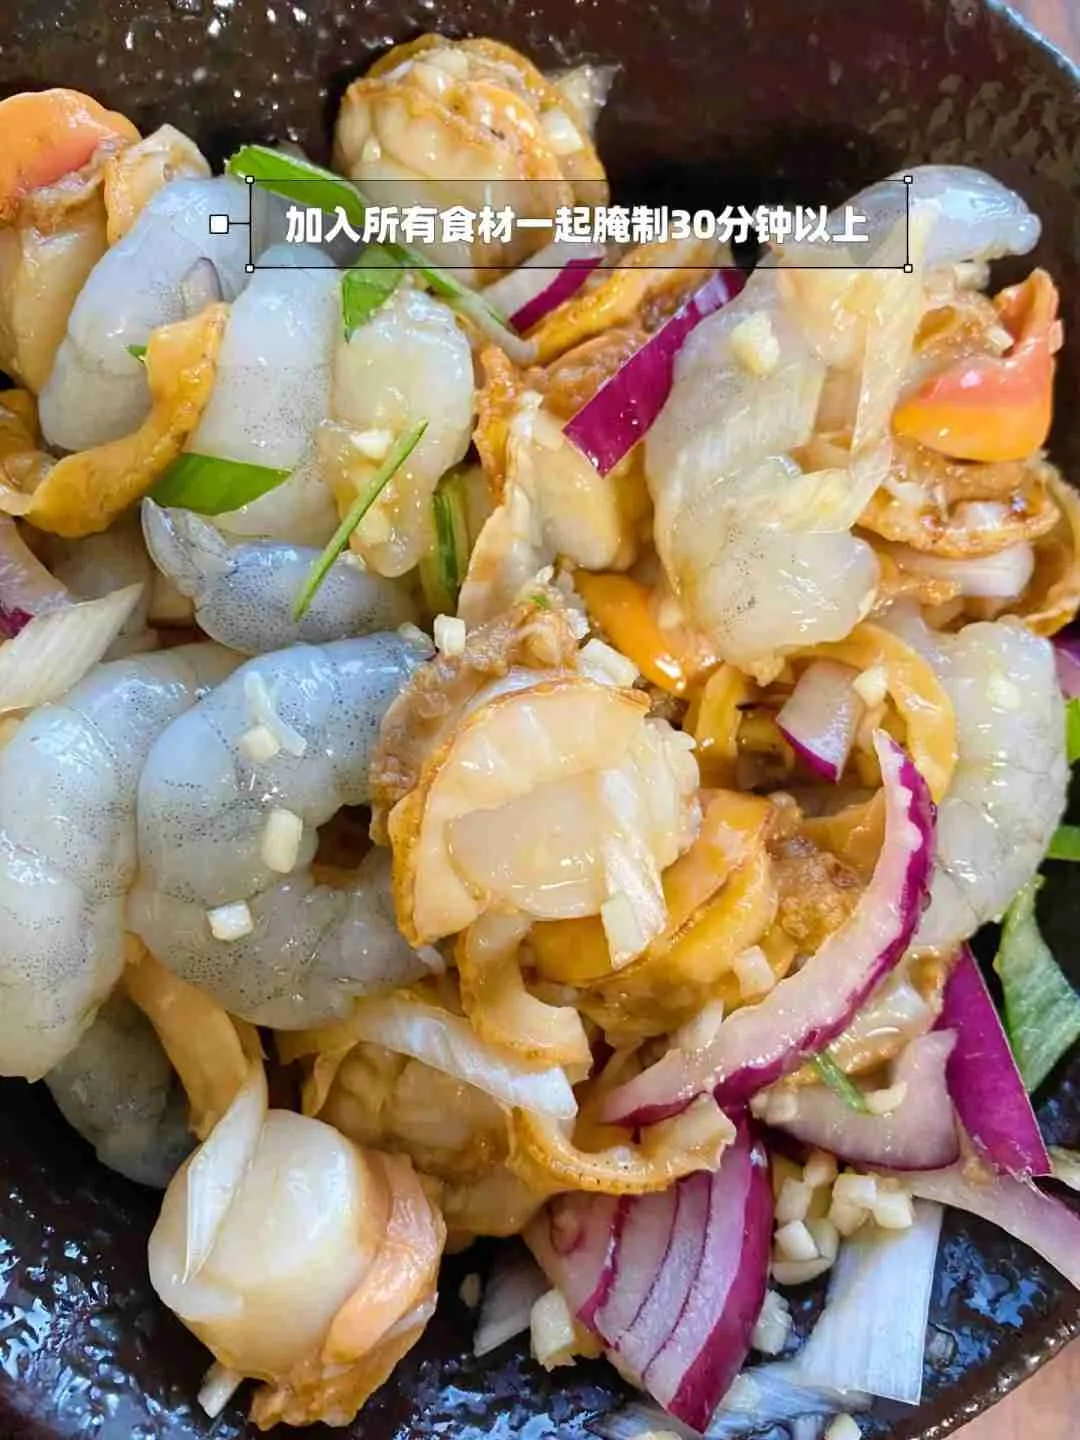 scallop andshrimp recipes healthy